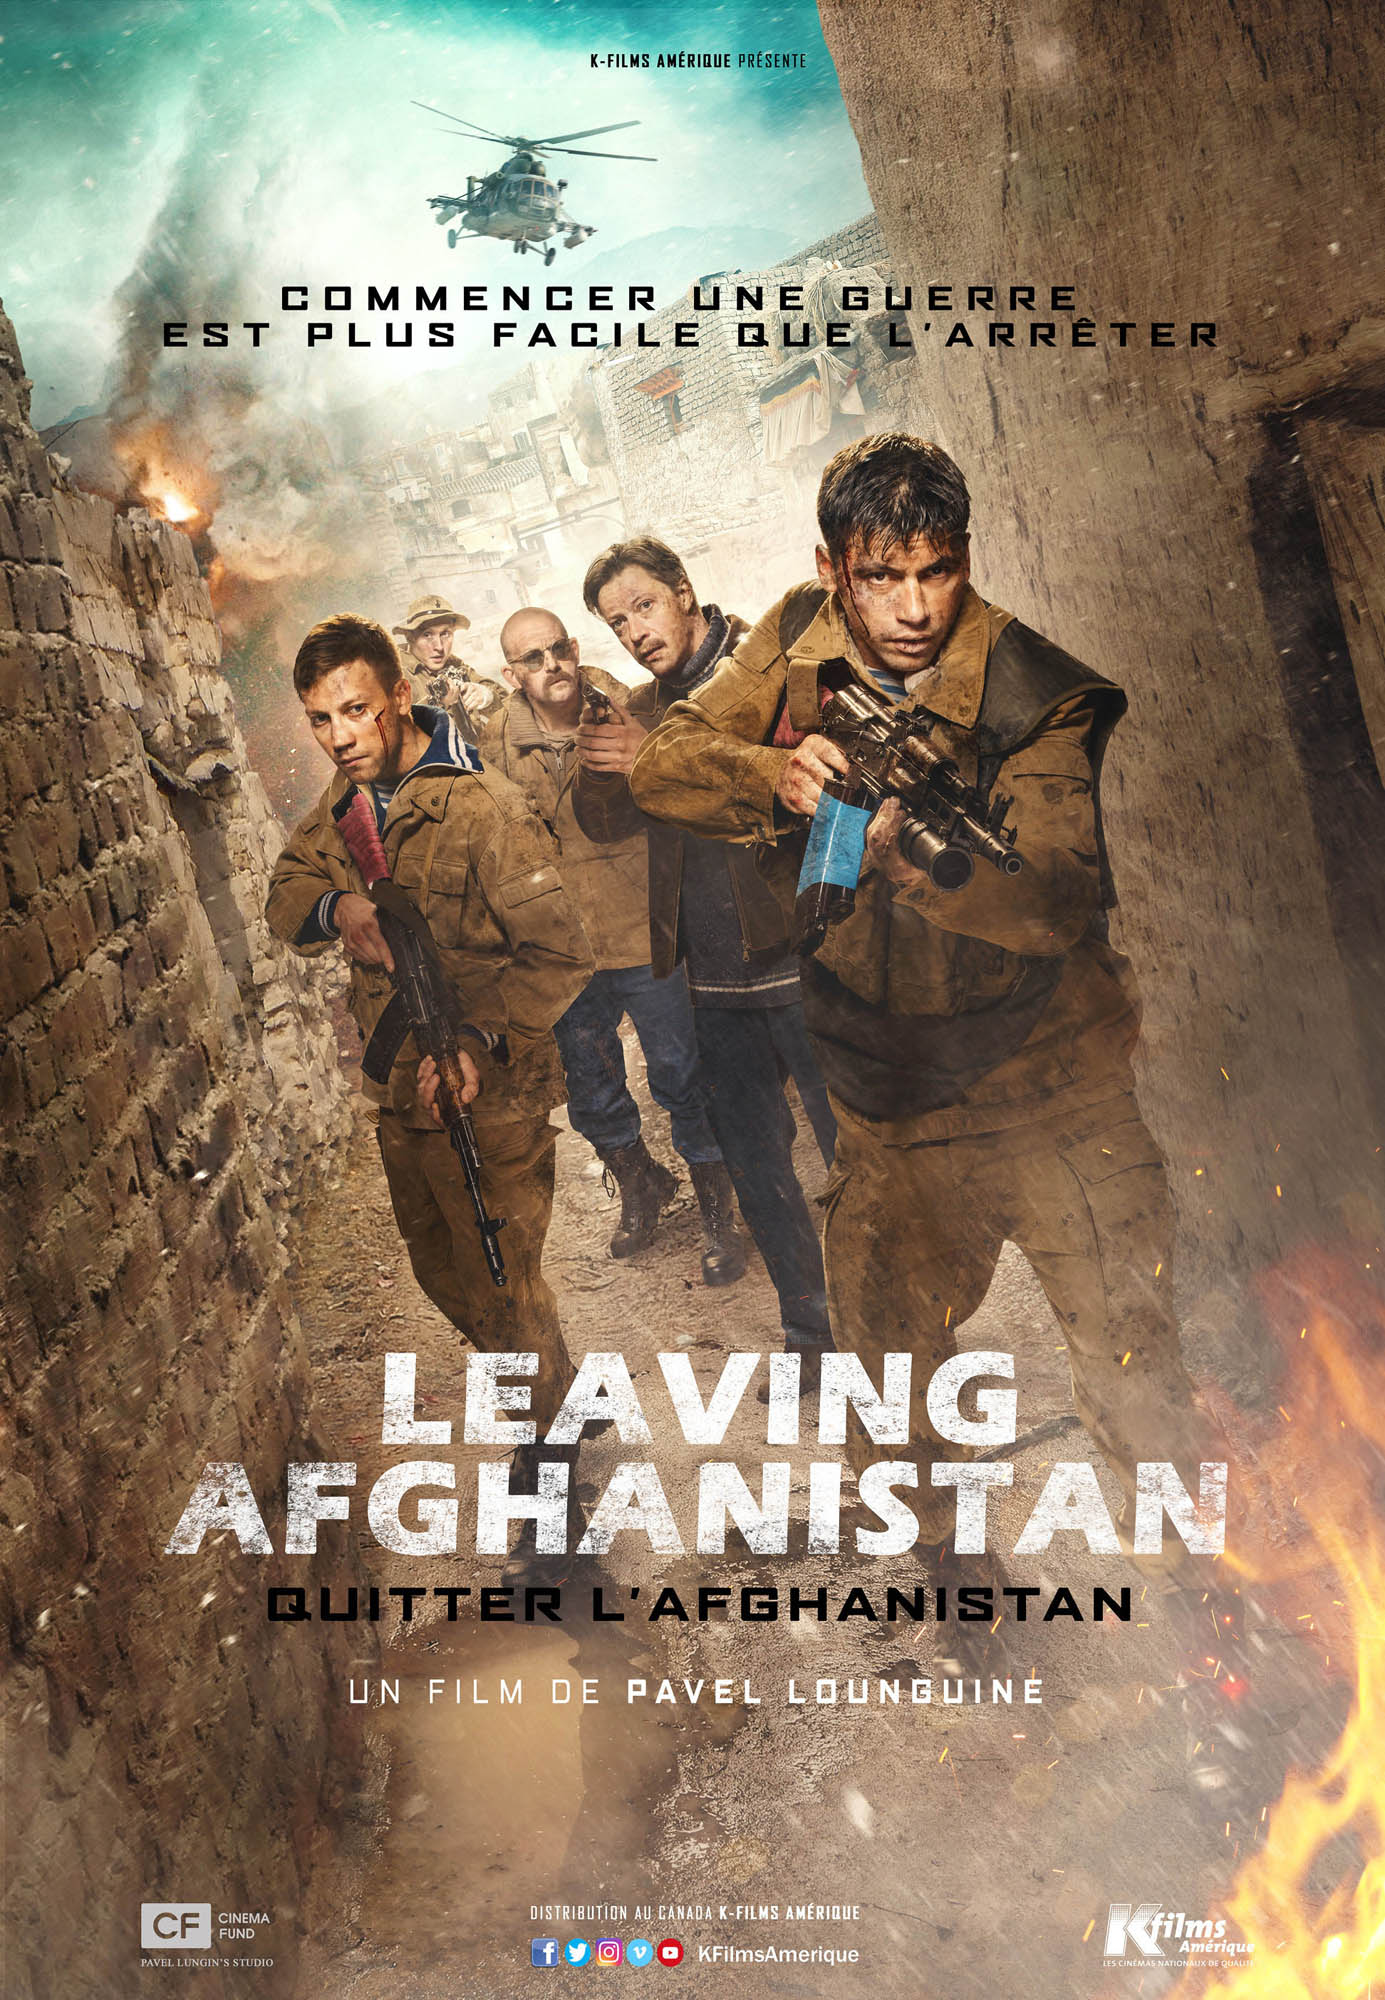 LEAVING AFGHANISTAN (Quitter l’Afghanistan)